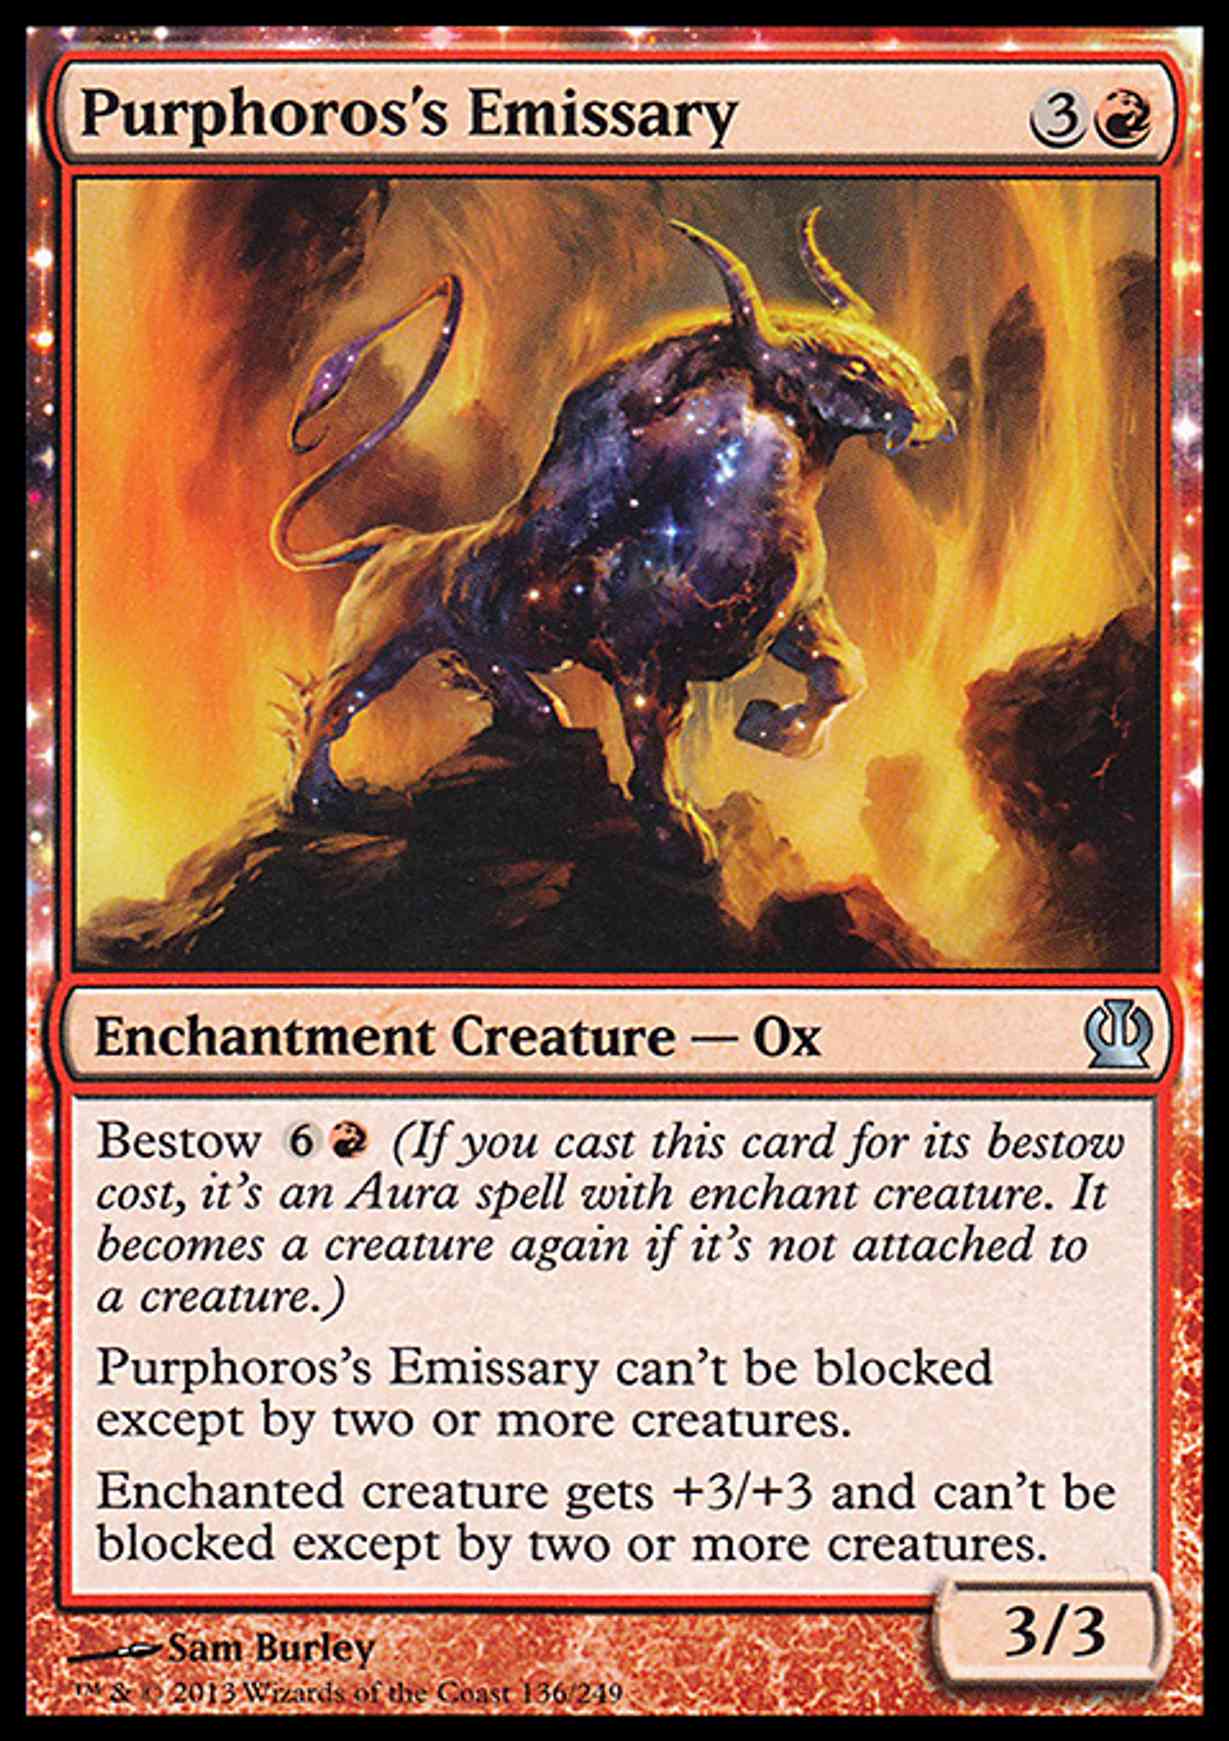 Purphoros's Emissary magic card front